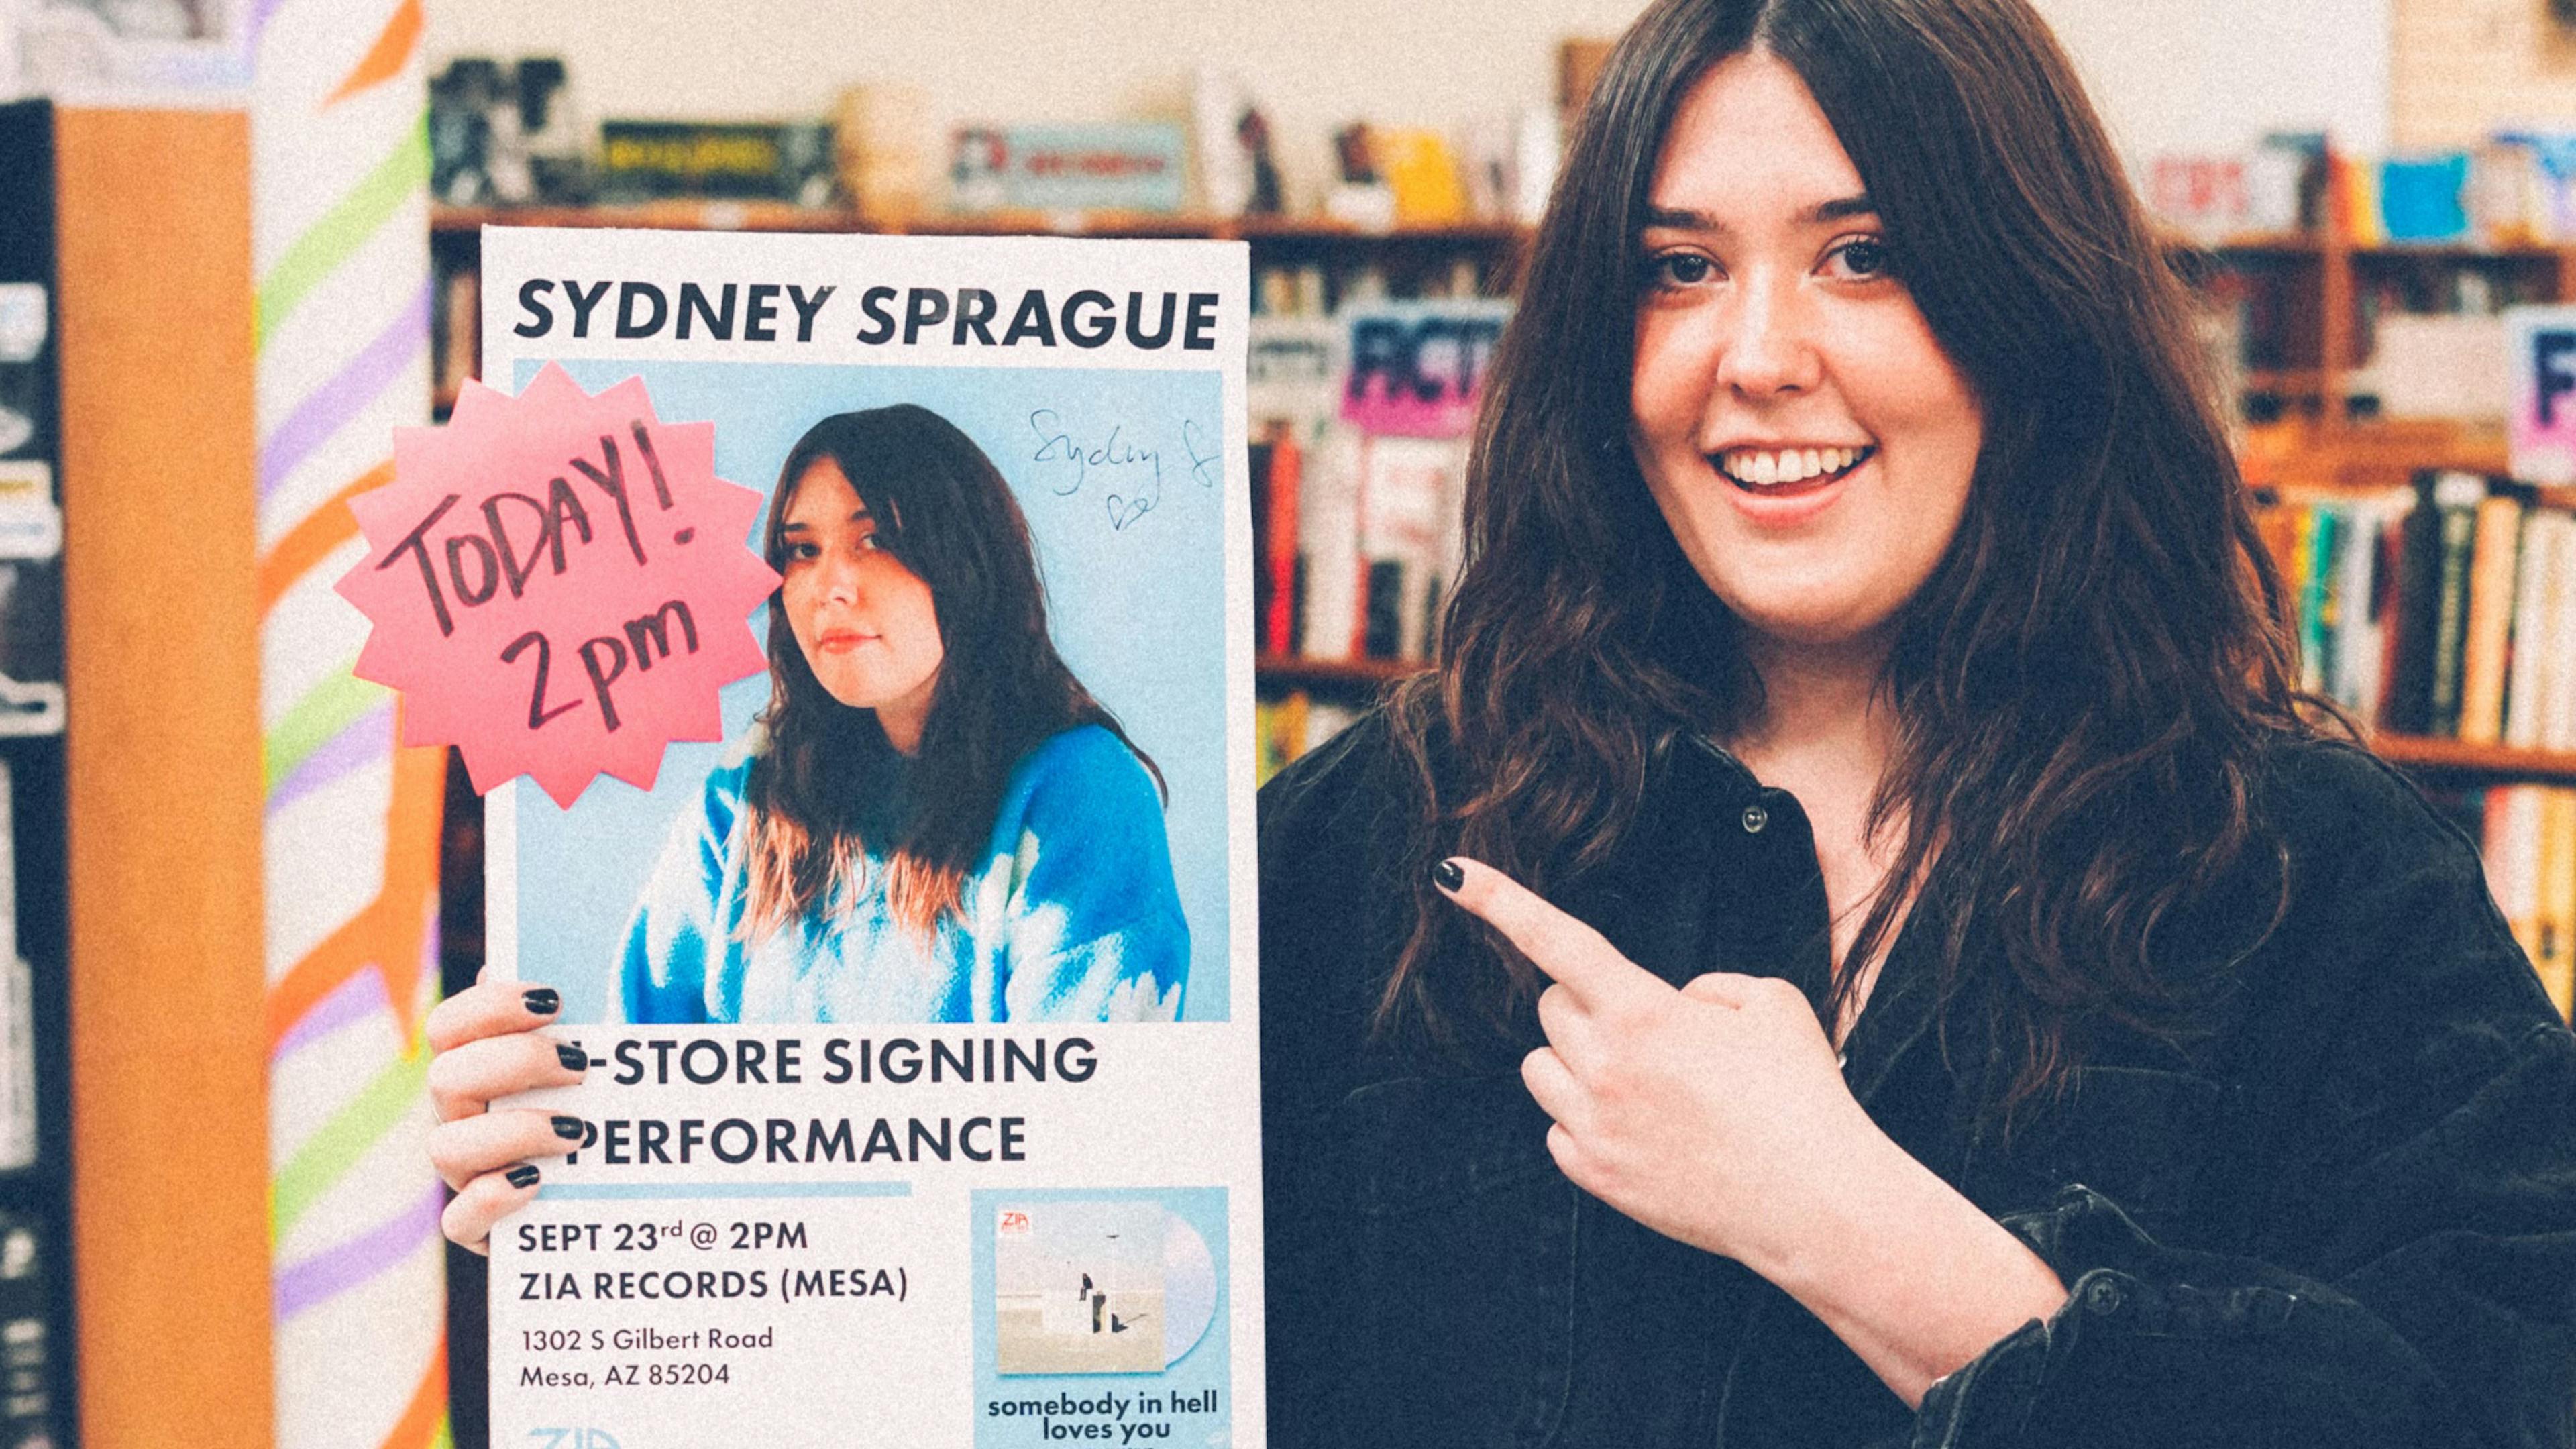 In pictures: Sydney Sprague’s album launch at Zia Records